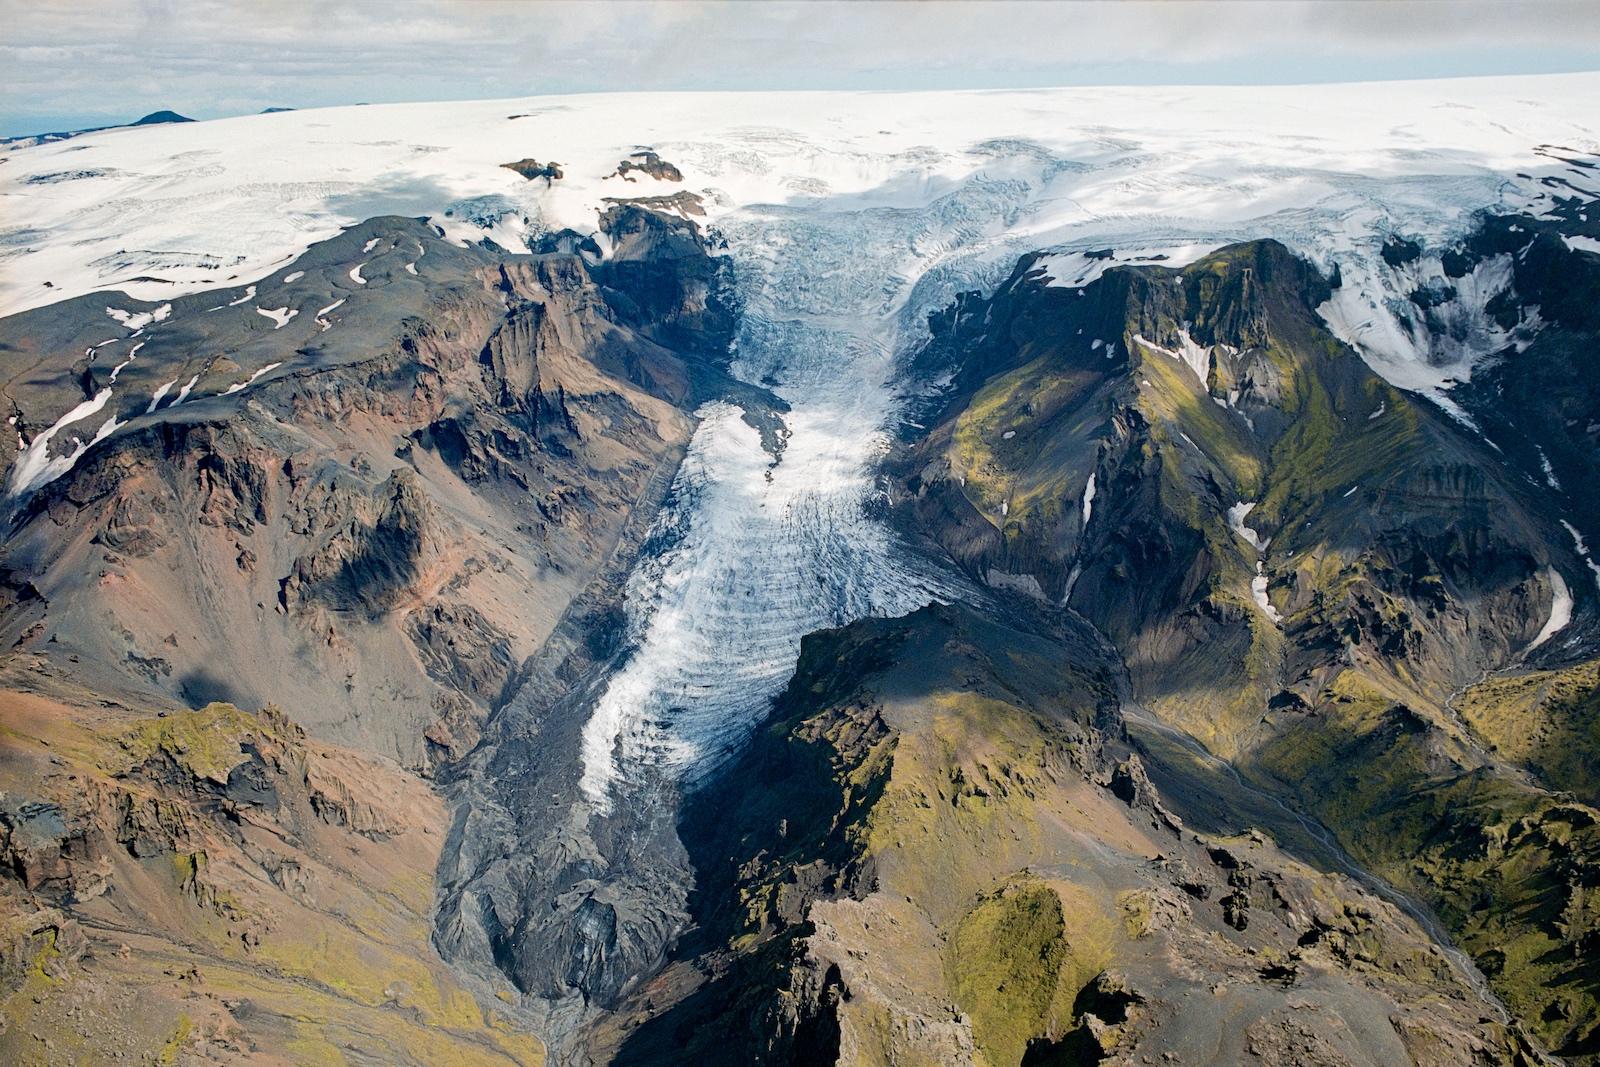 Olafur Eliasson, The glacier melt series 1999/2019, 2019, detail (Krossárjökull) 30 C-prints, each 31 x 91 x 2.4 cm